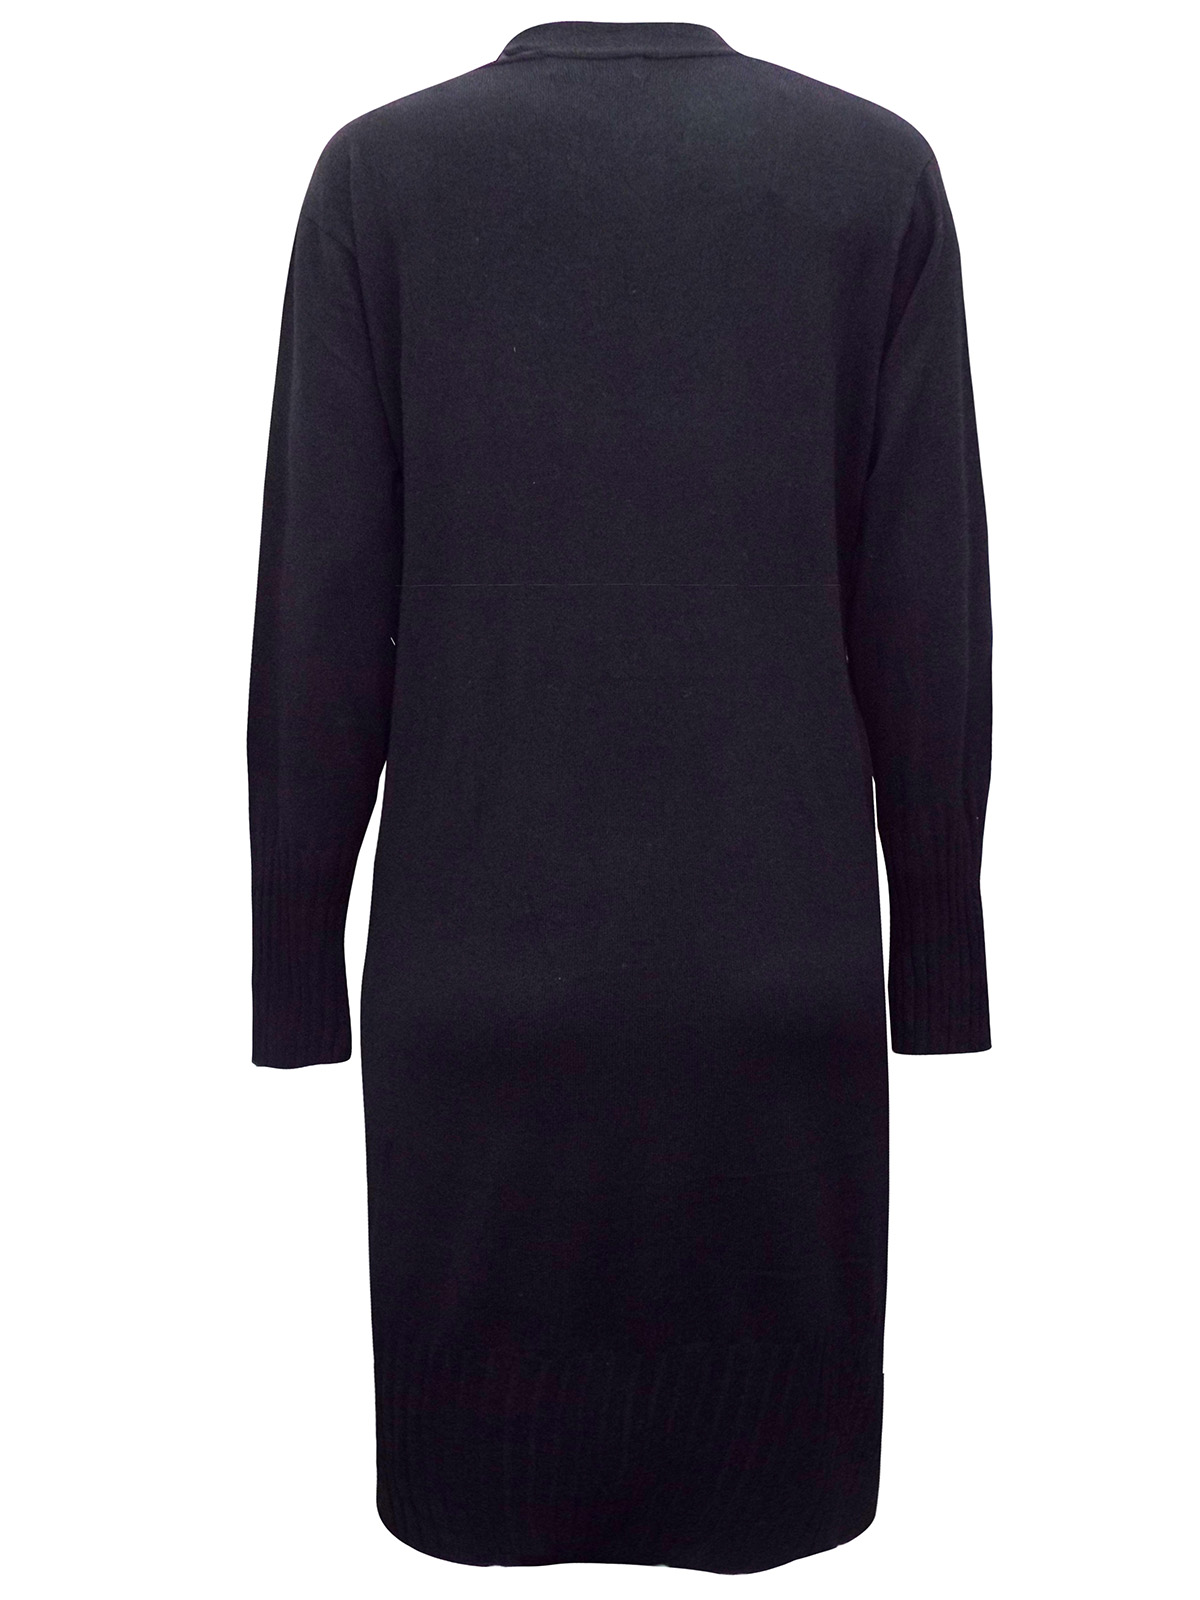 F&F - - F&F BLACK Longline Open Front Cardigan - Plus Size 18 to 22